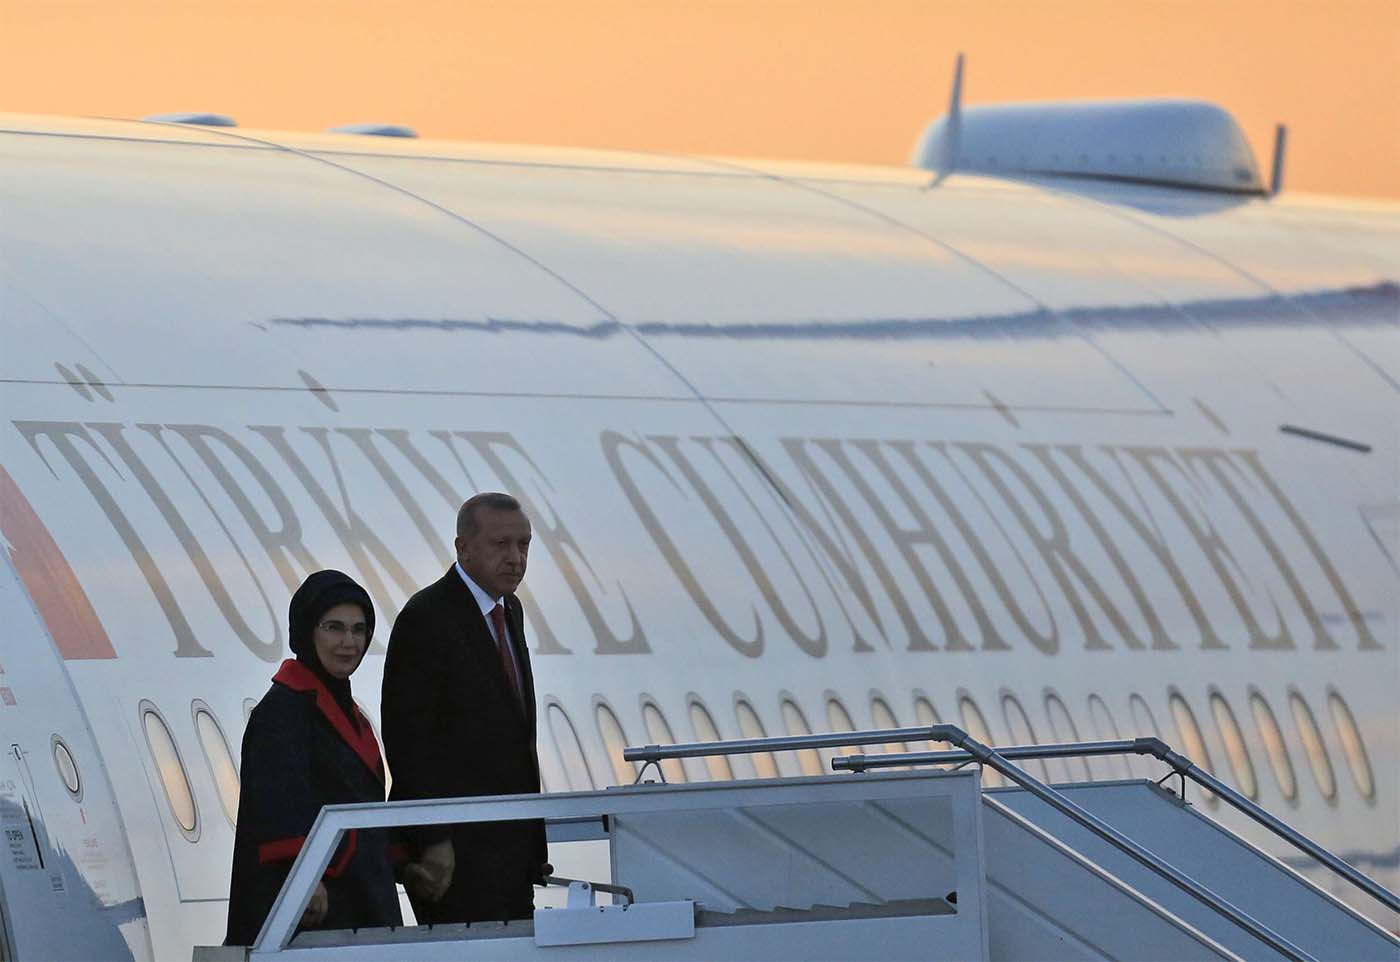 Turkey's President Recep Tayyip Erdogan, accompanied by his wife Emine, arrives at Ataturk airport